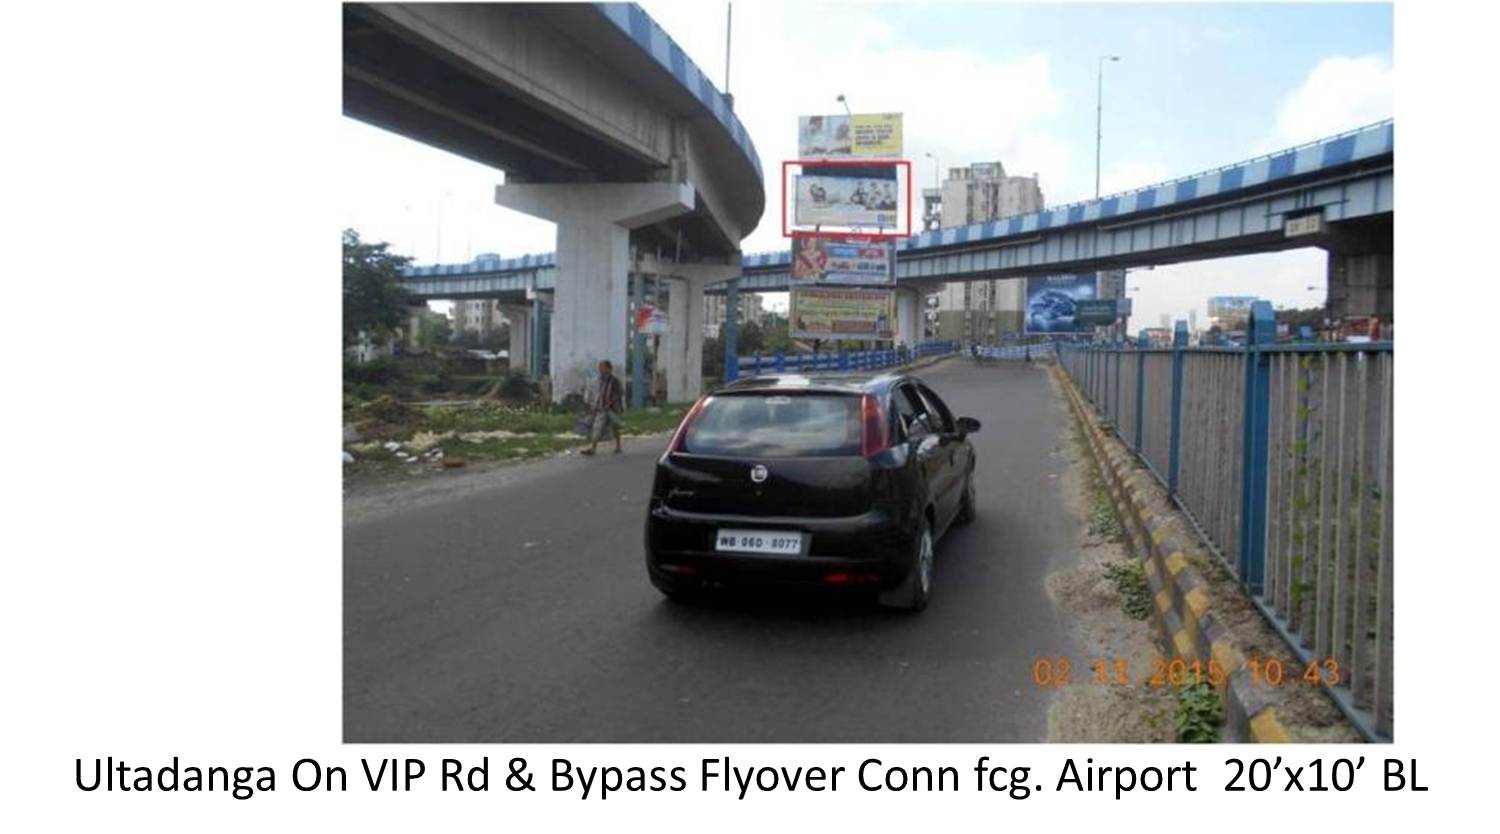 Ultadanga On VIP Rd & Bypass Flyover Conn, Kolkata